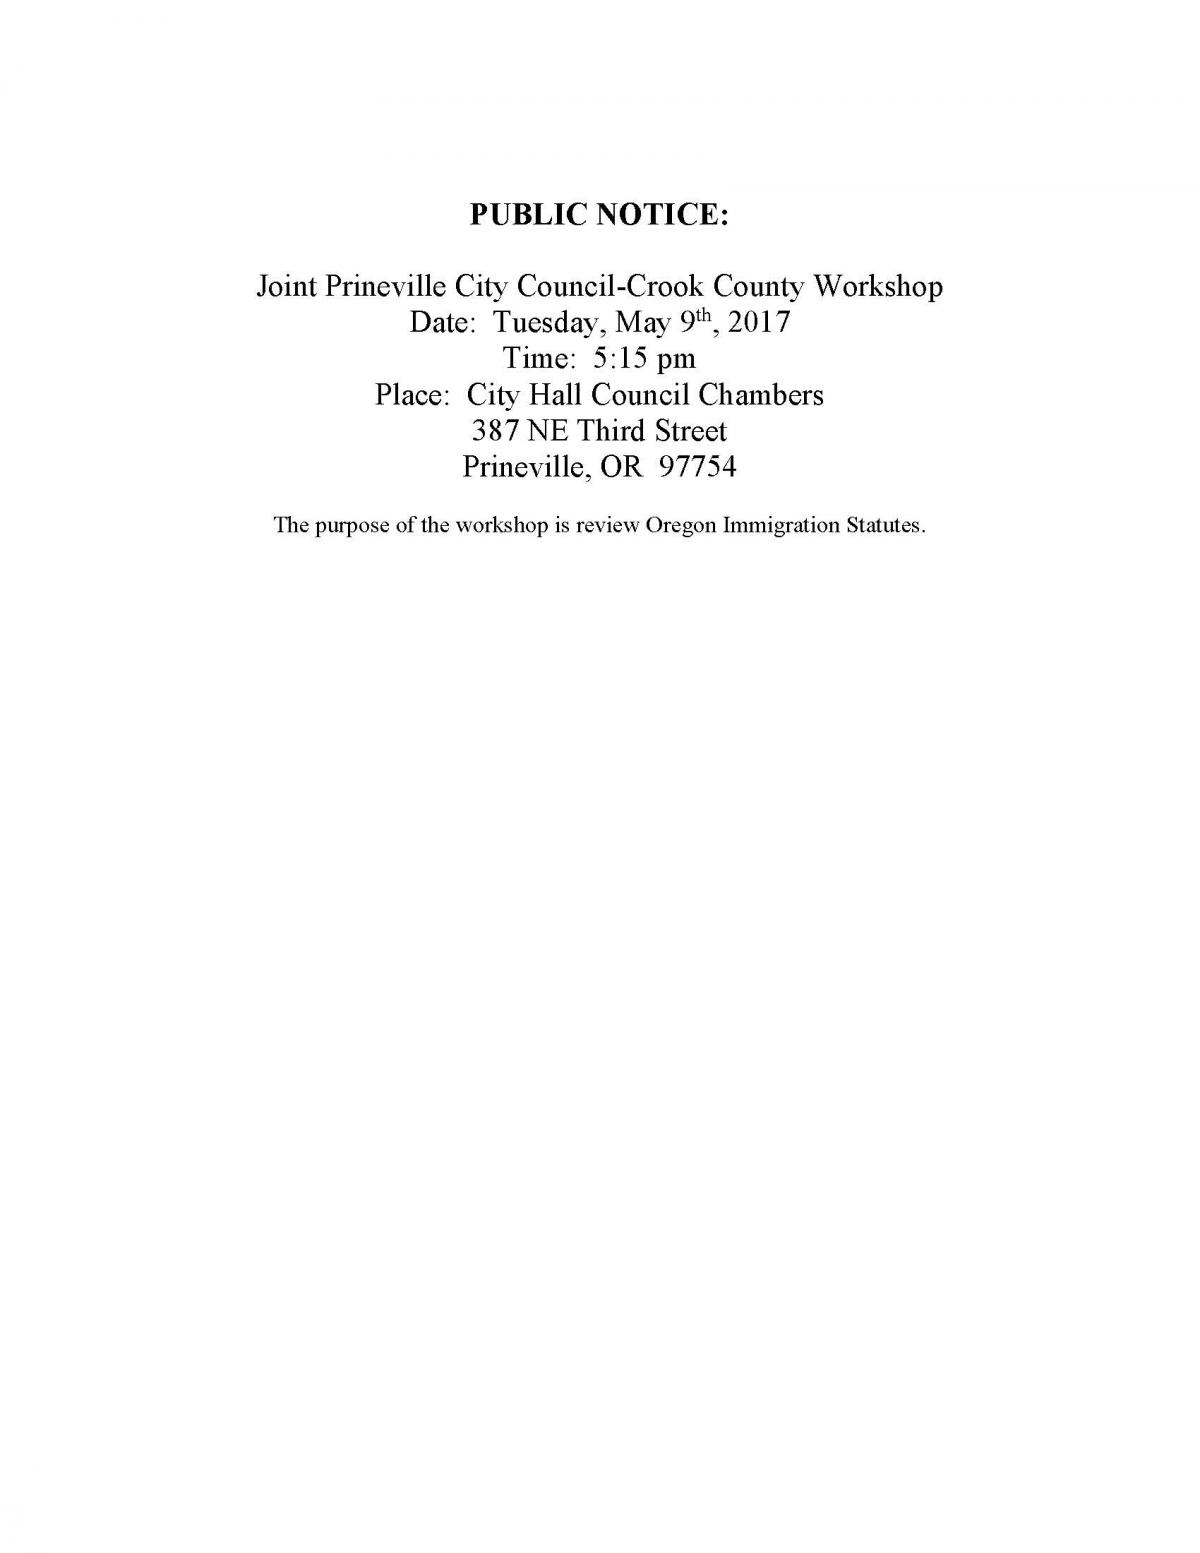 Public Notice - Joint City-County Workshop 5-9-17